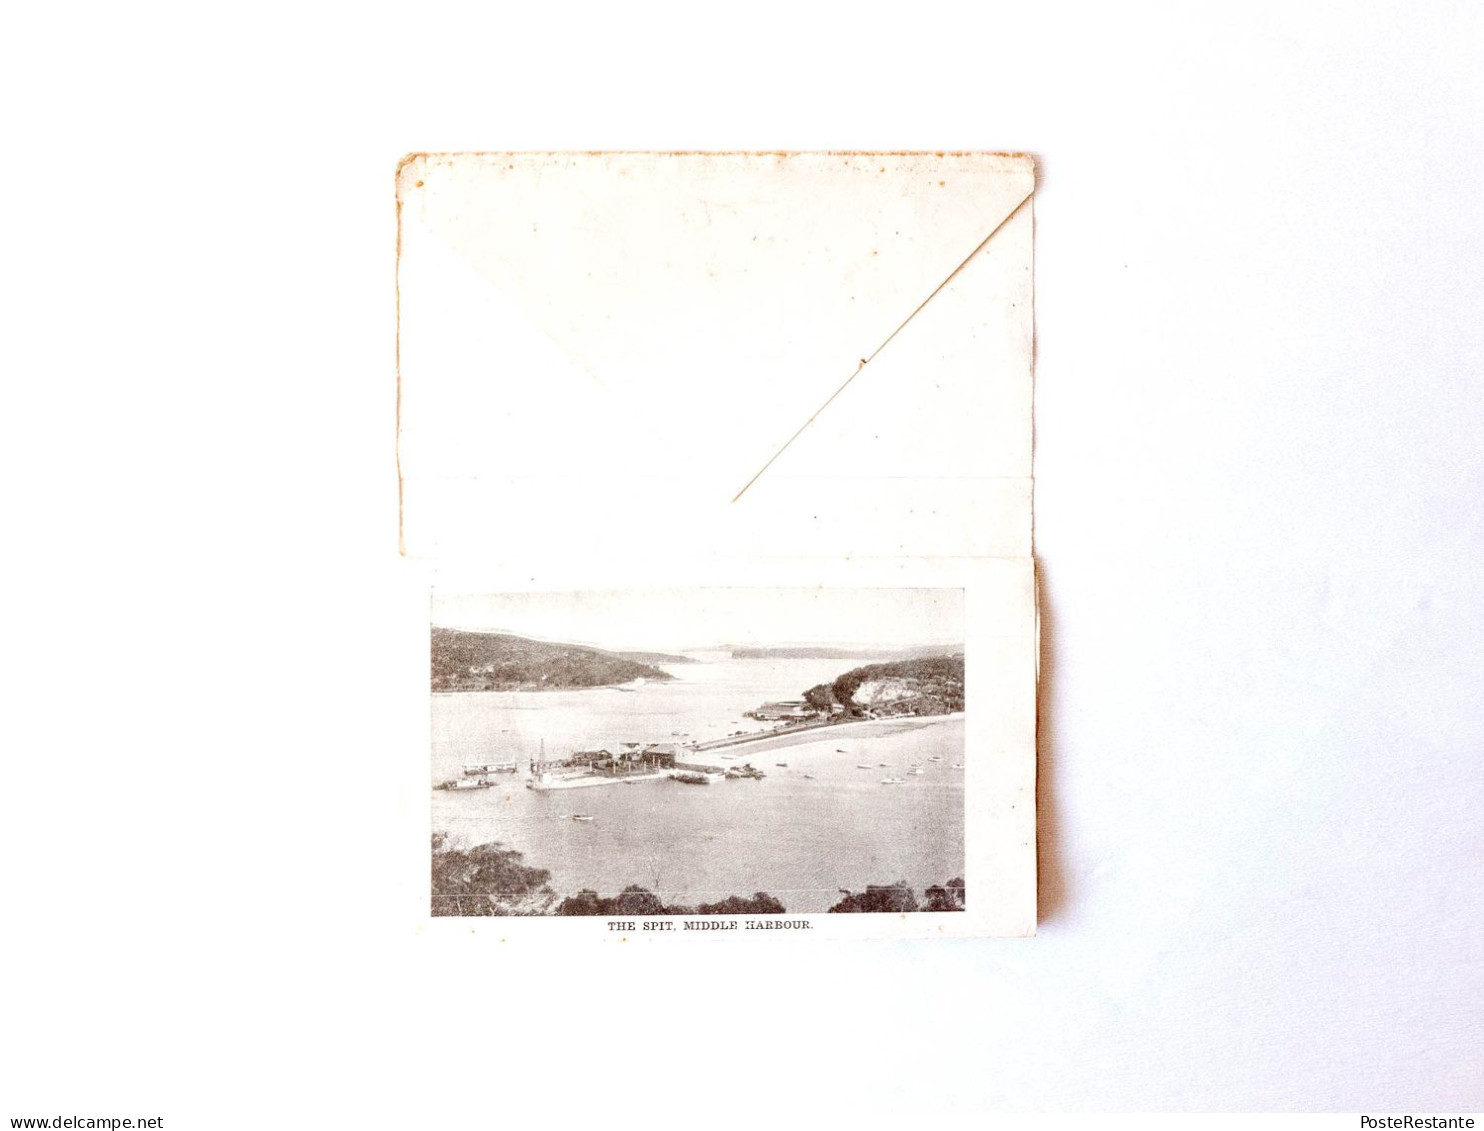 Sydney No. 3 Souvenir, small foldout photo album with black and white pictures, Australian collectible